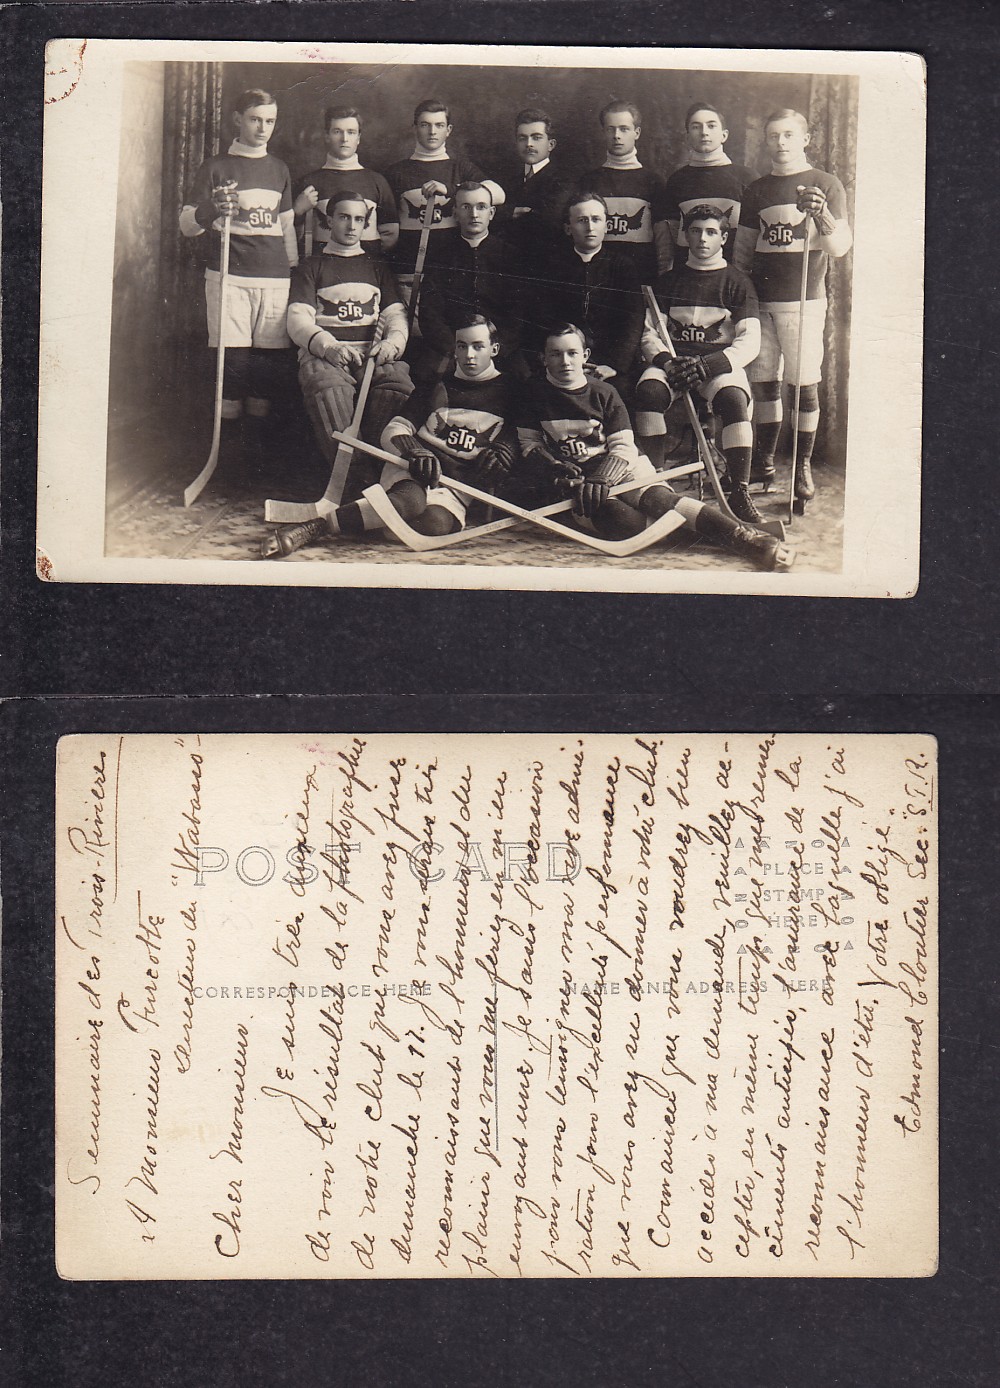 1900'S HOCKEY TEAM POST CARD photo